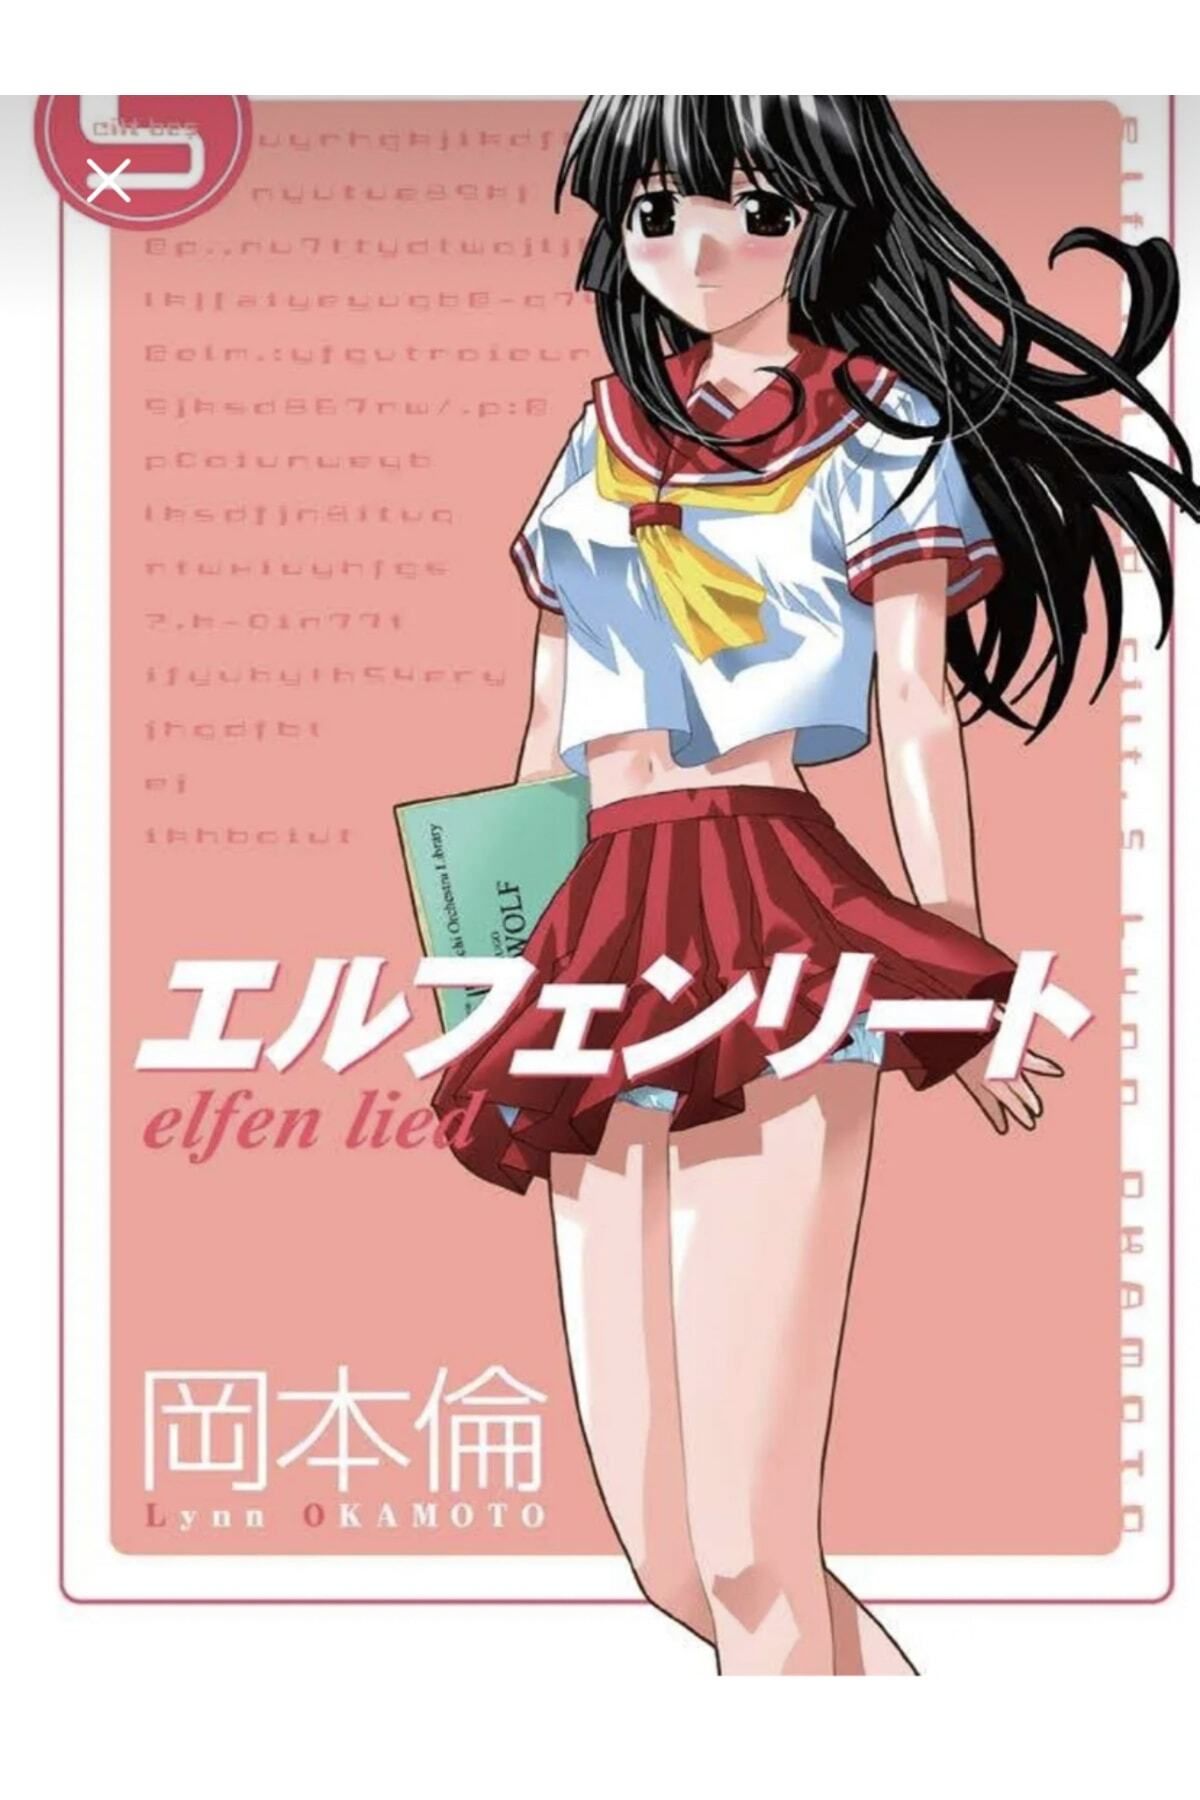 Elfen Lied Nana Manga Volume 1 Chapter 7 Anime by Amanomoon on DeviantArt